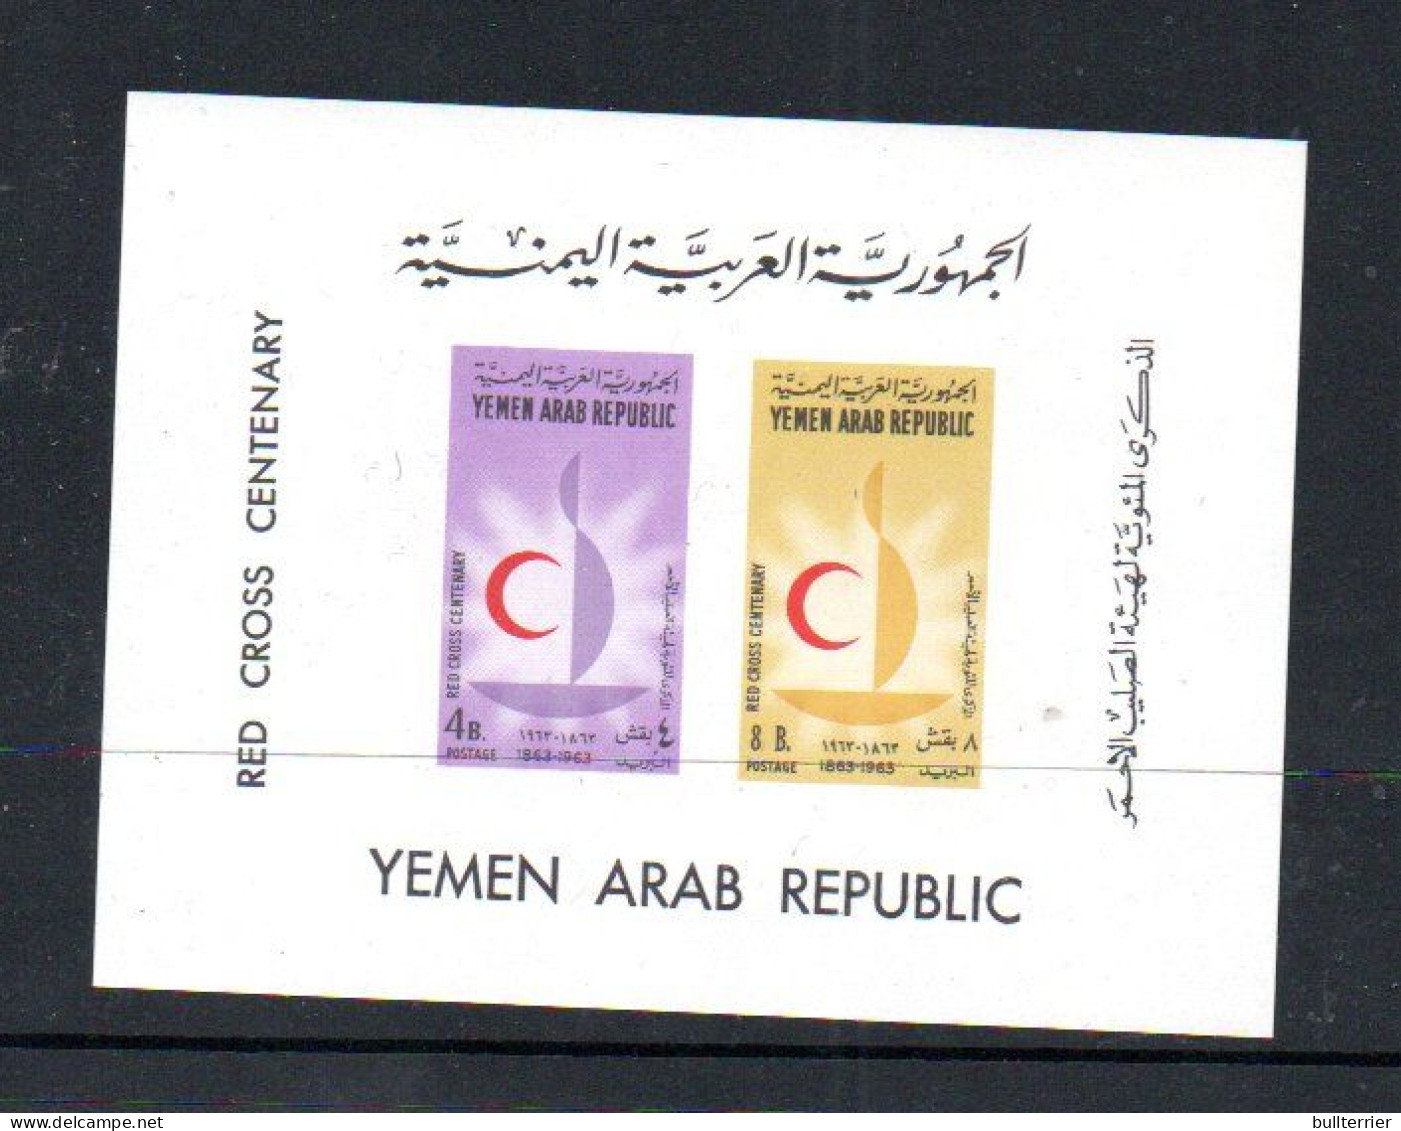 MEDICINE - YEMEN ARAB REPUBLIC - 1963 - RED CROSS CENTENARY  S/SHEET MINT NEVER HINGED SG £22 - Medicina